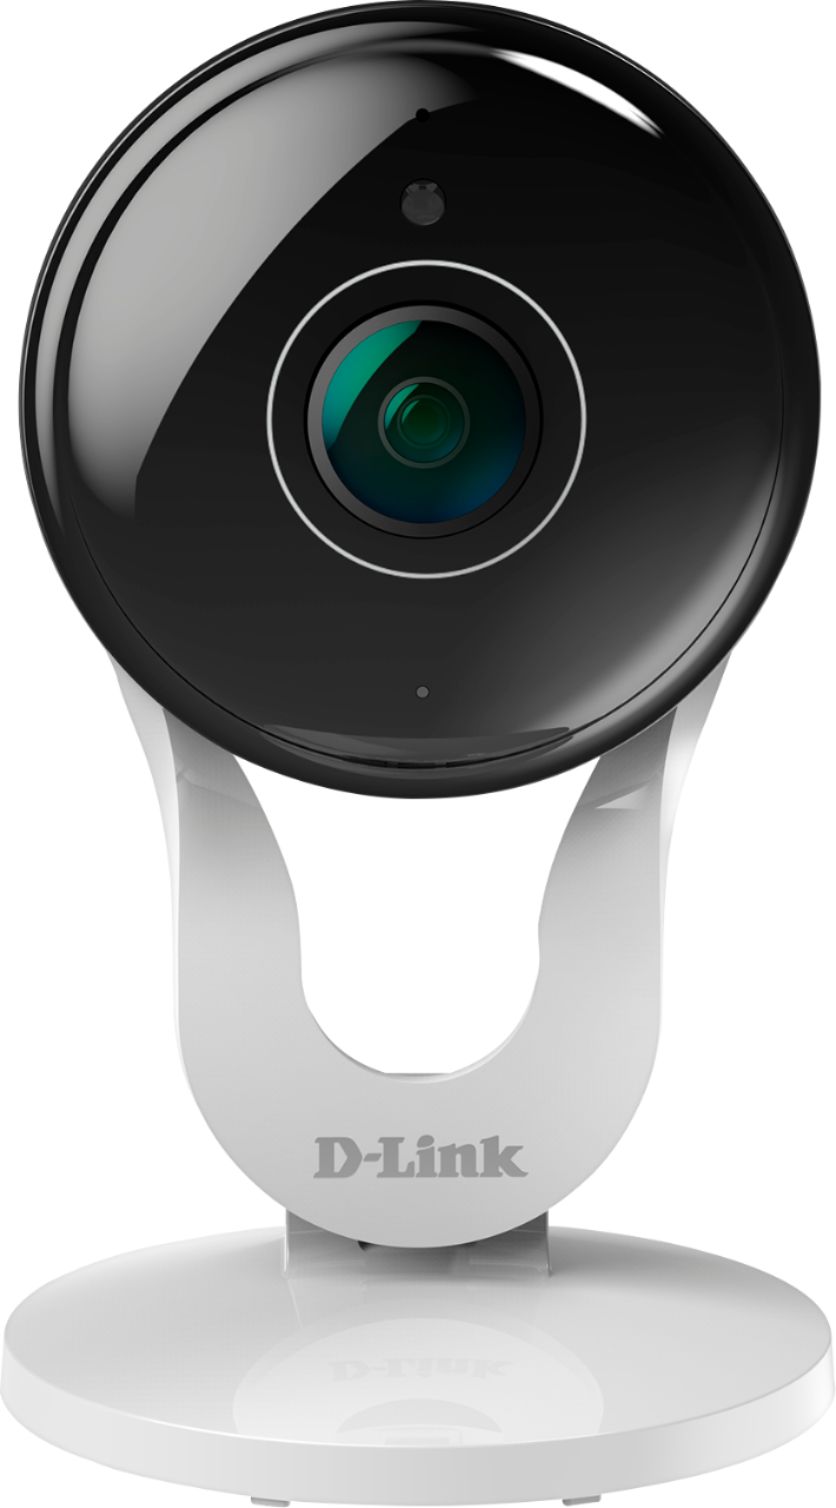 d link camera system